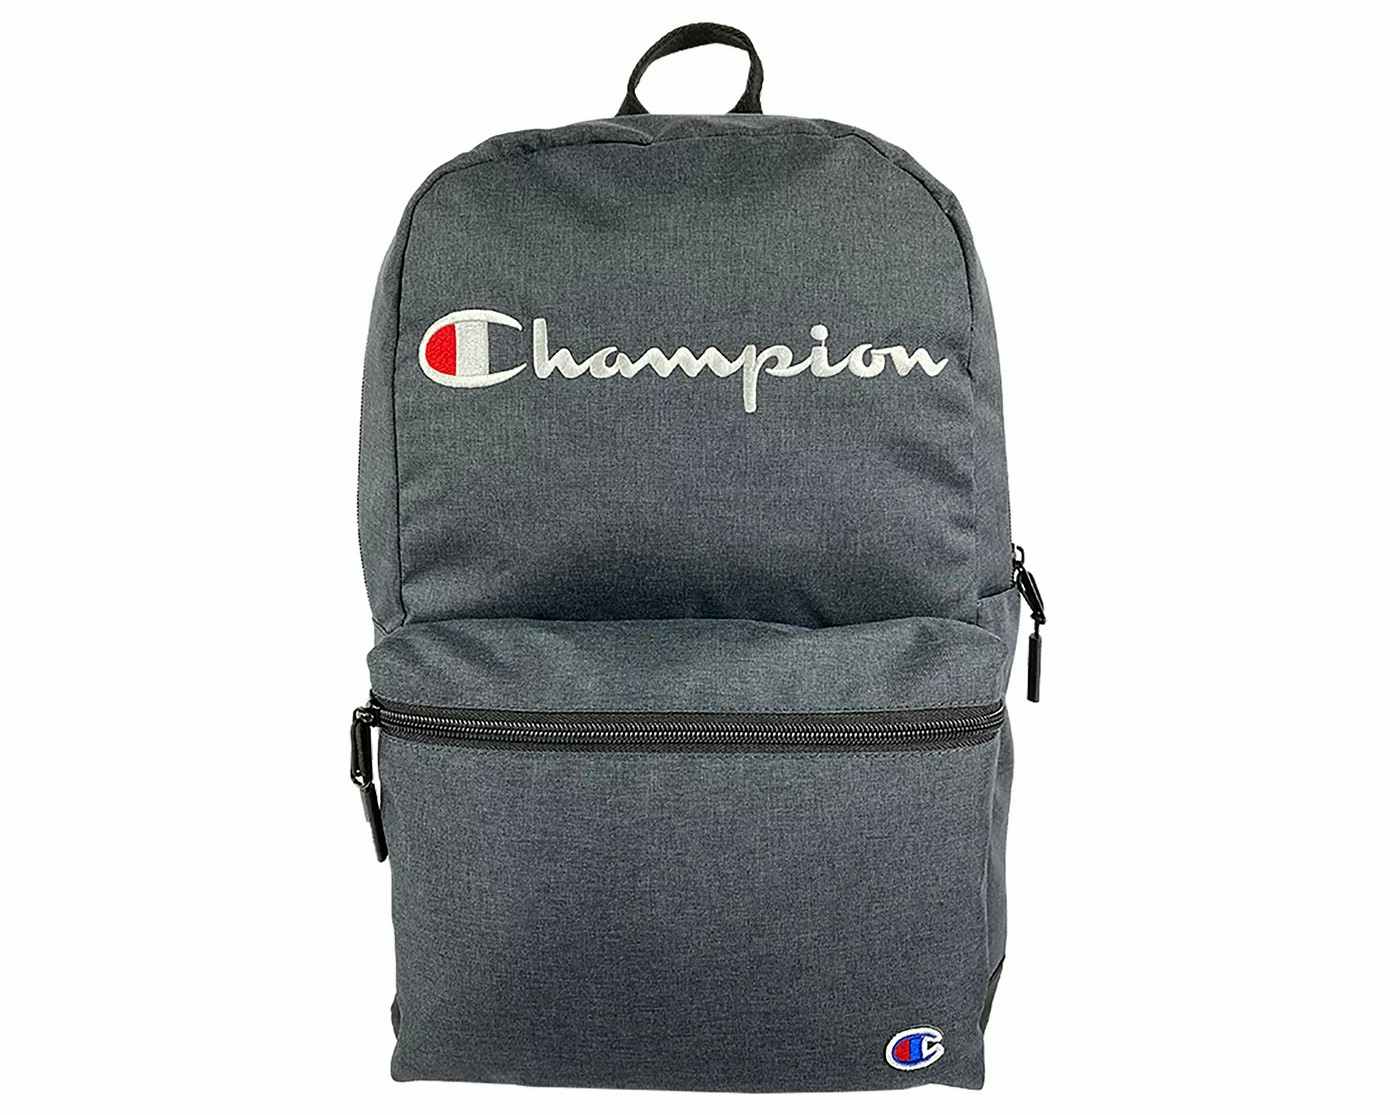 kohls-champion-backpack-2021-3